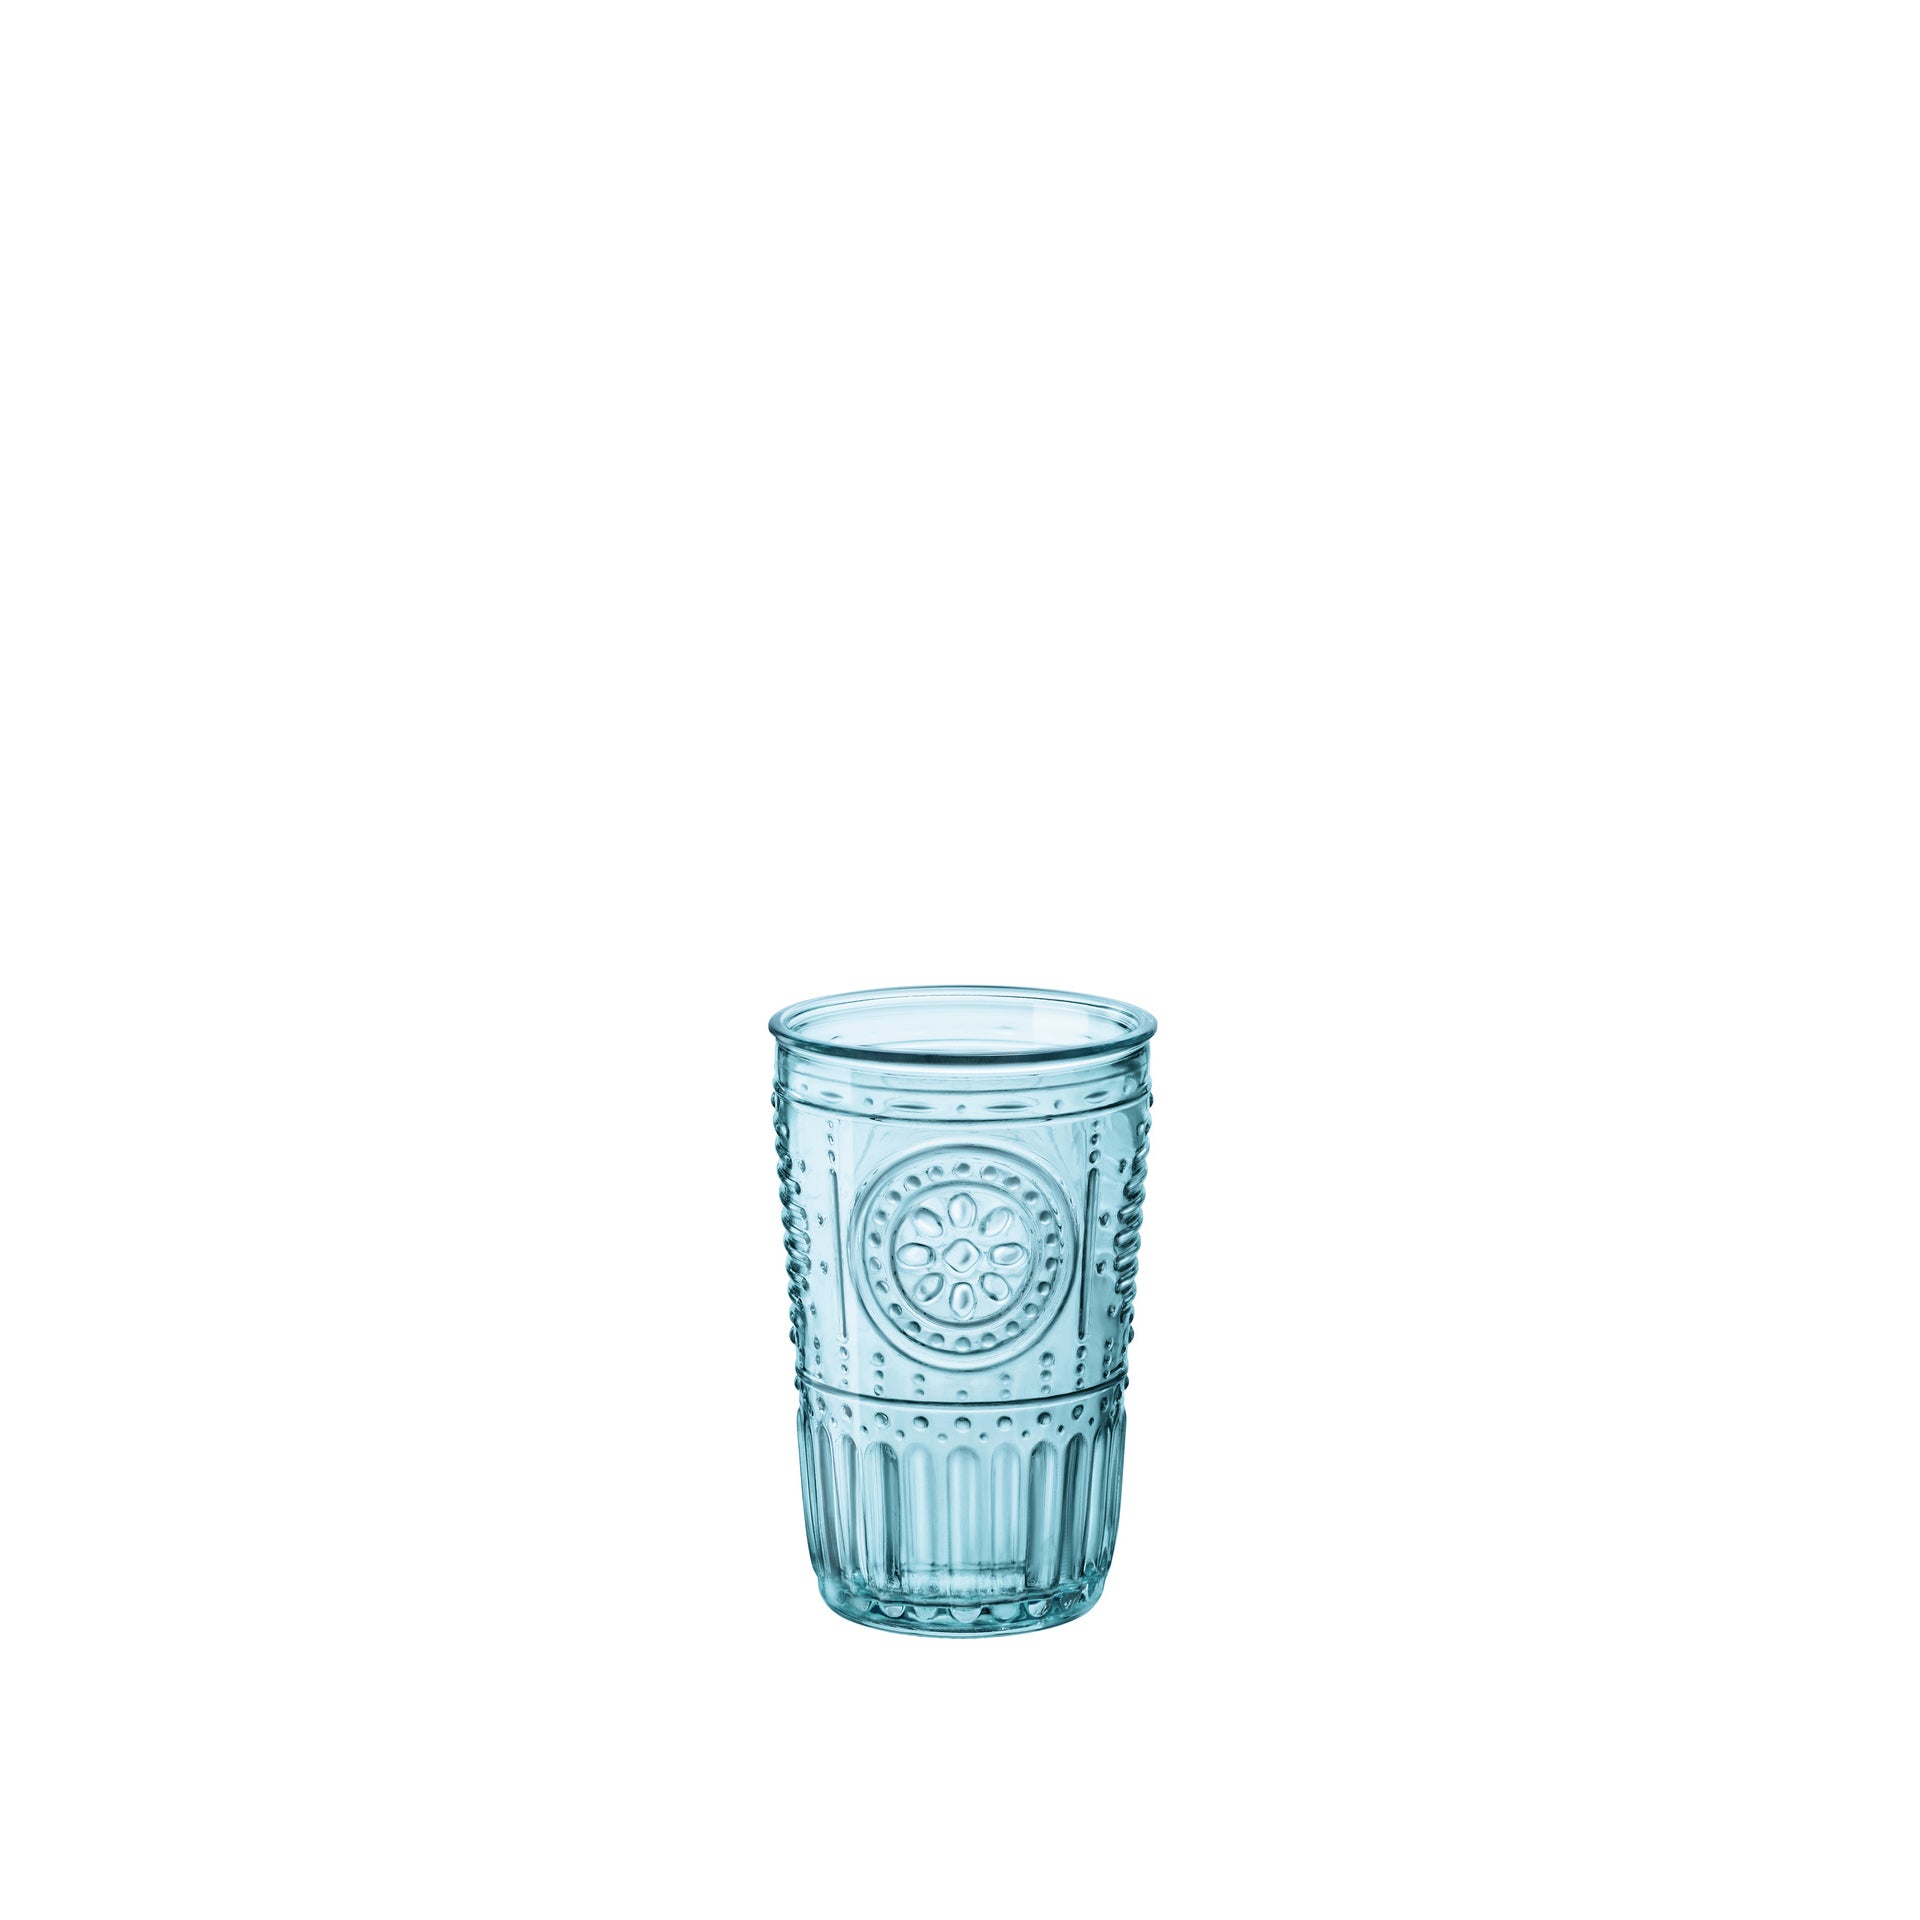 Romantic 11.5 oz. Water Drinking Glasses (Set of 4)